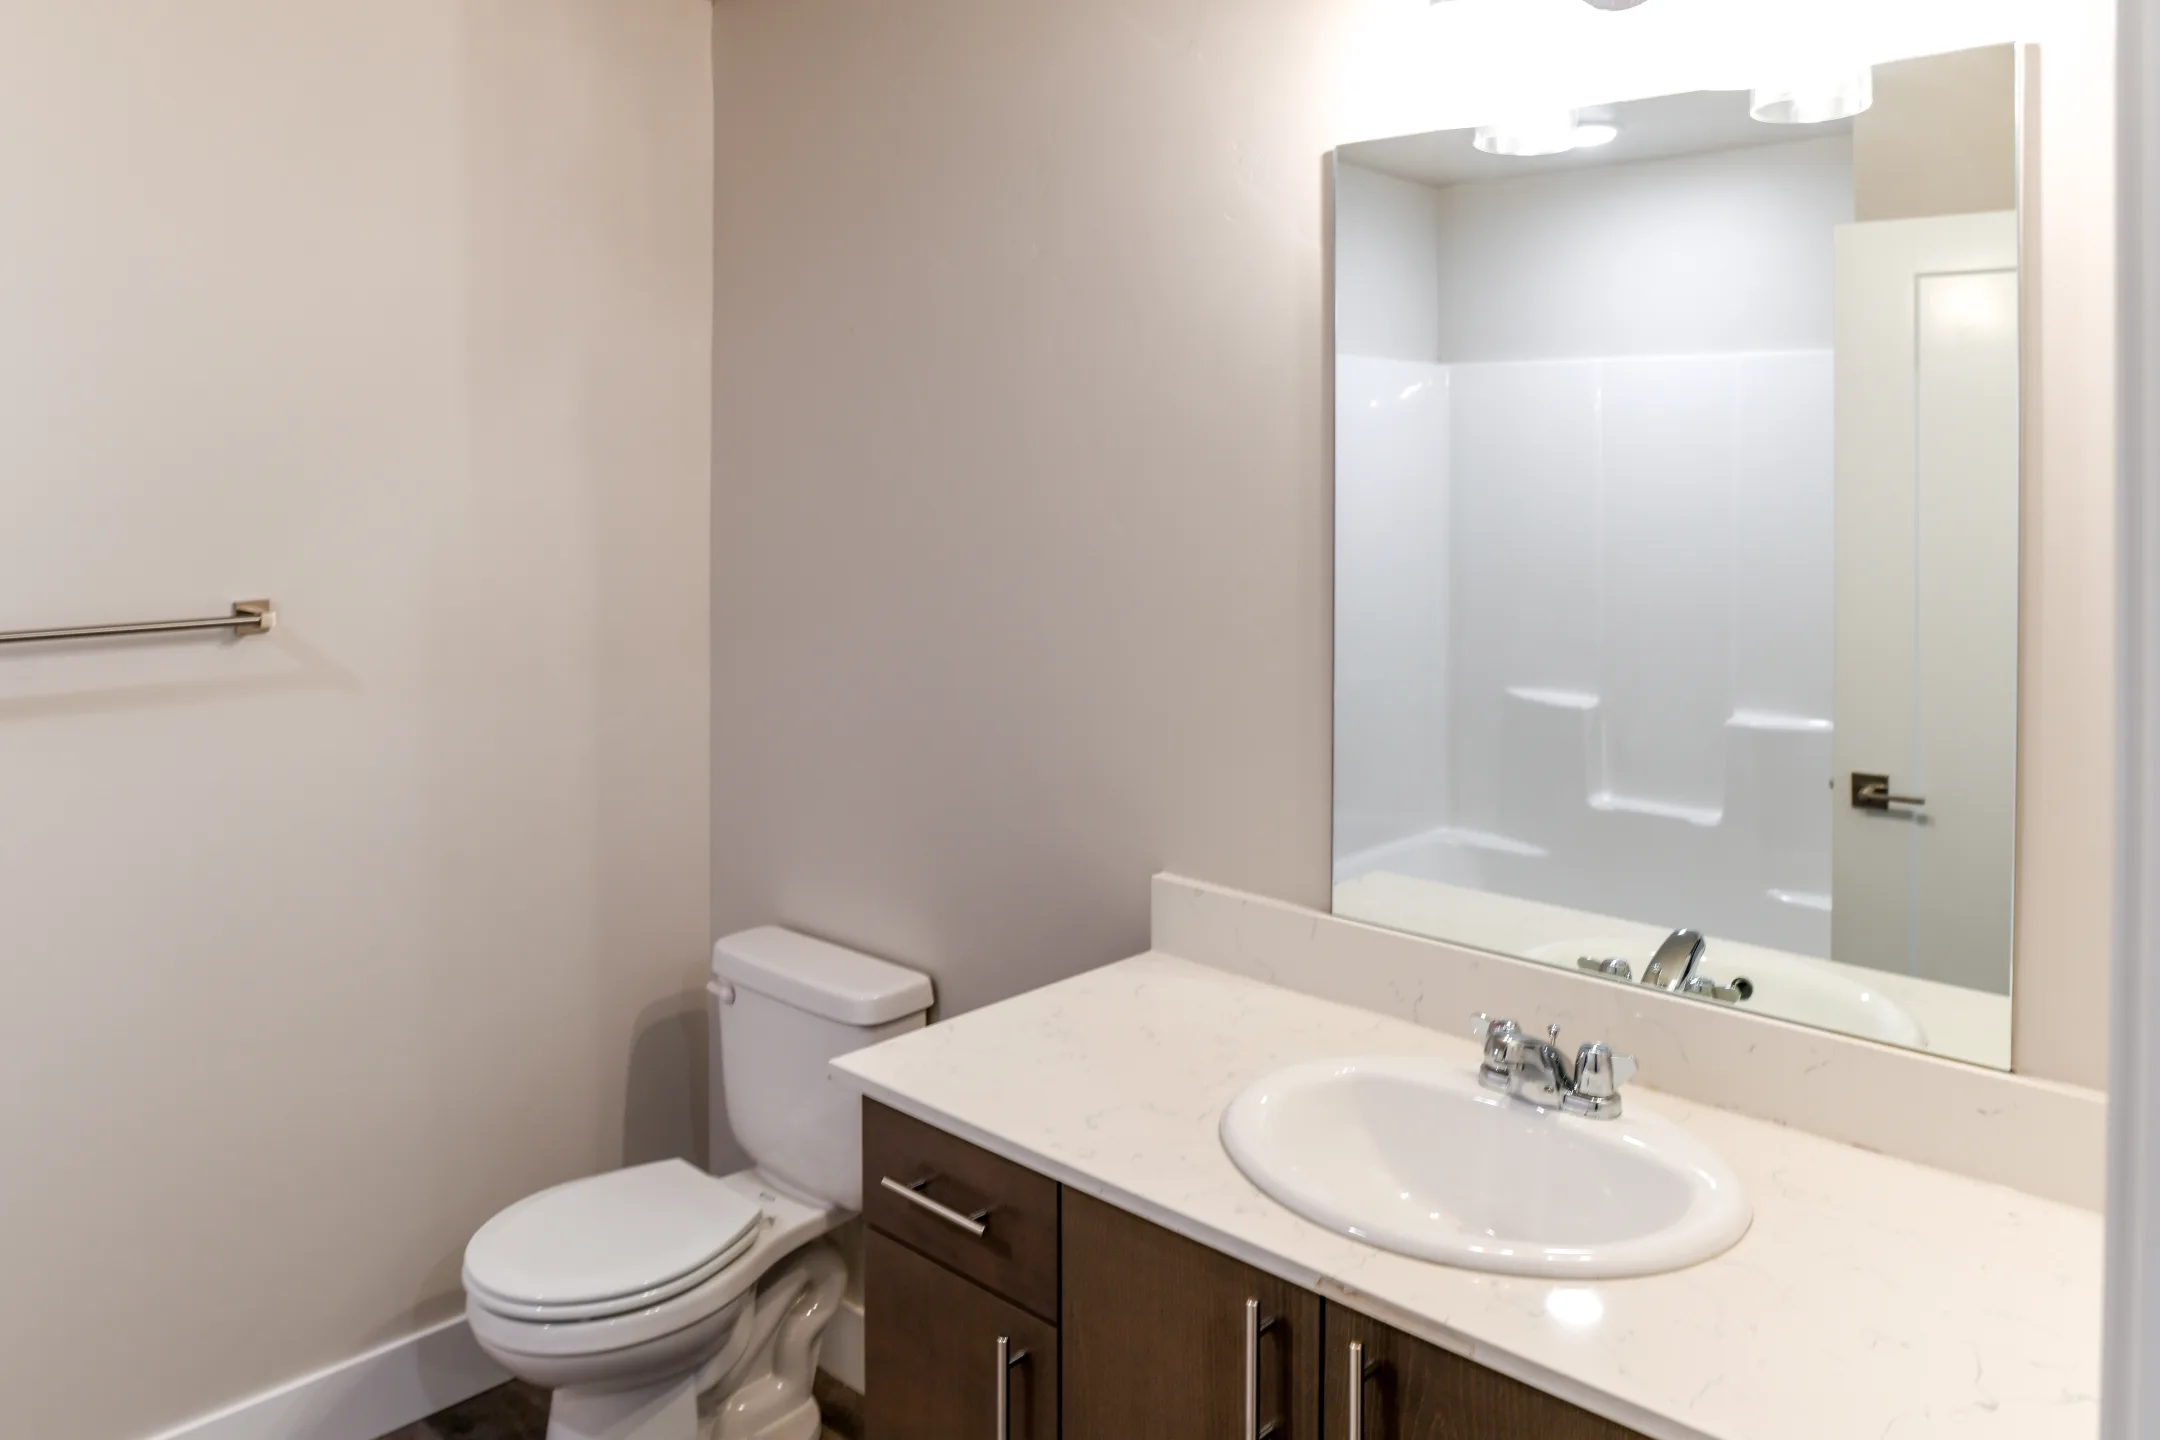 Bathroom - Whitefish Apartment Homes - Whitefish, MT